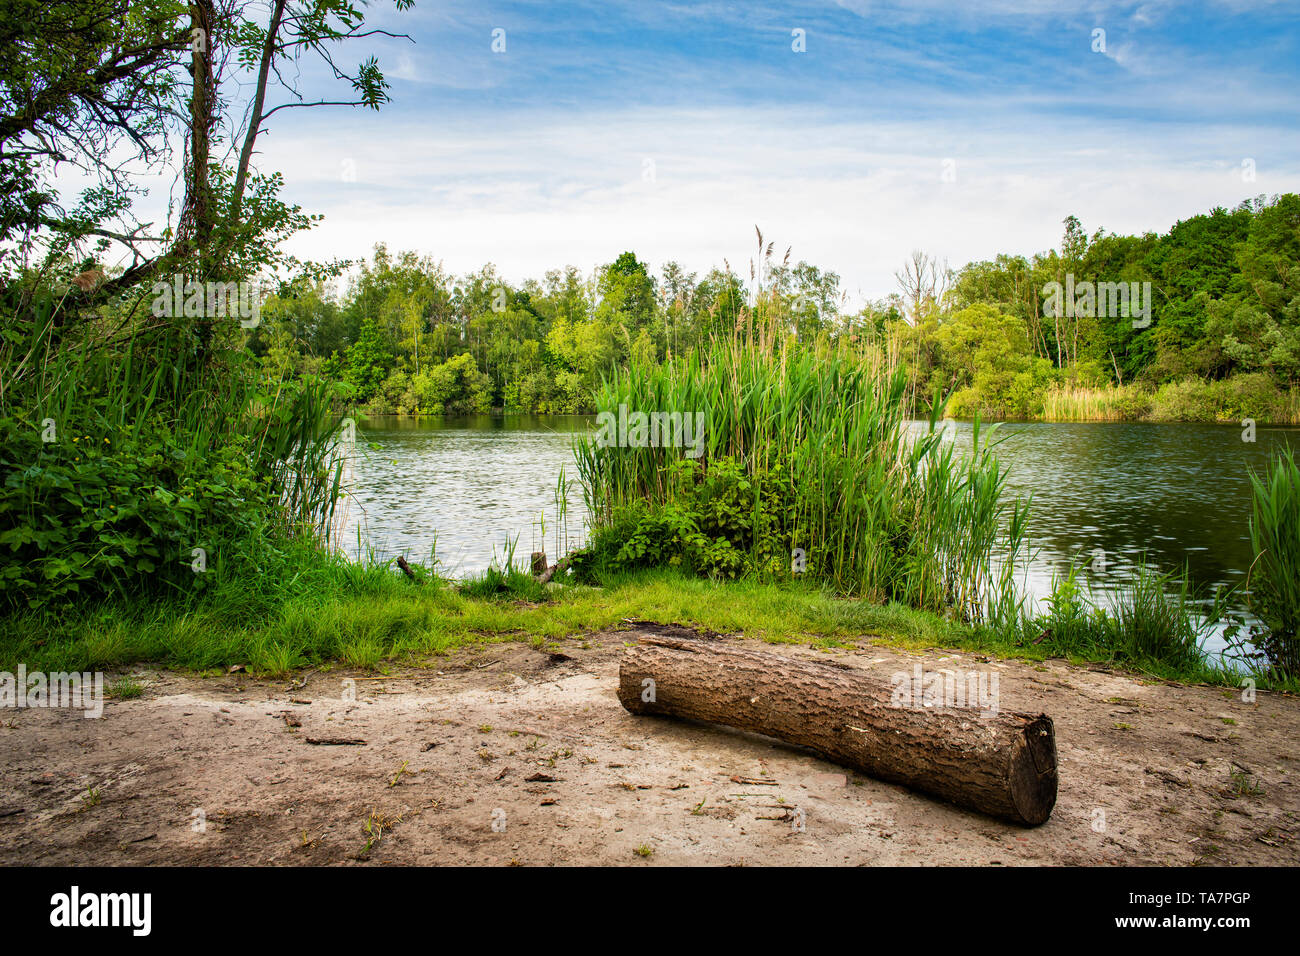 Walenhoek, Niel, Belgium: Log in front of a beautiful natural pond. Stock Photo